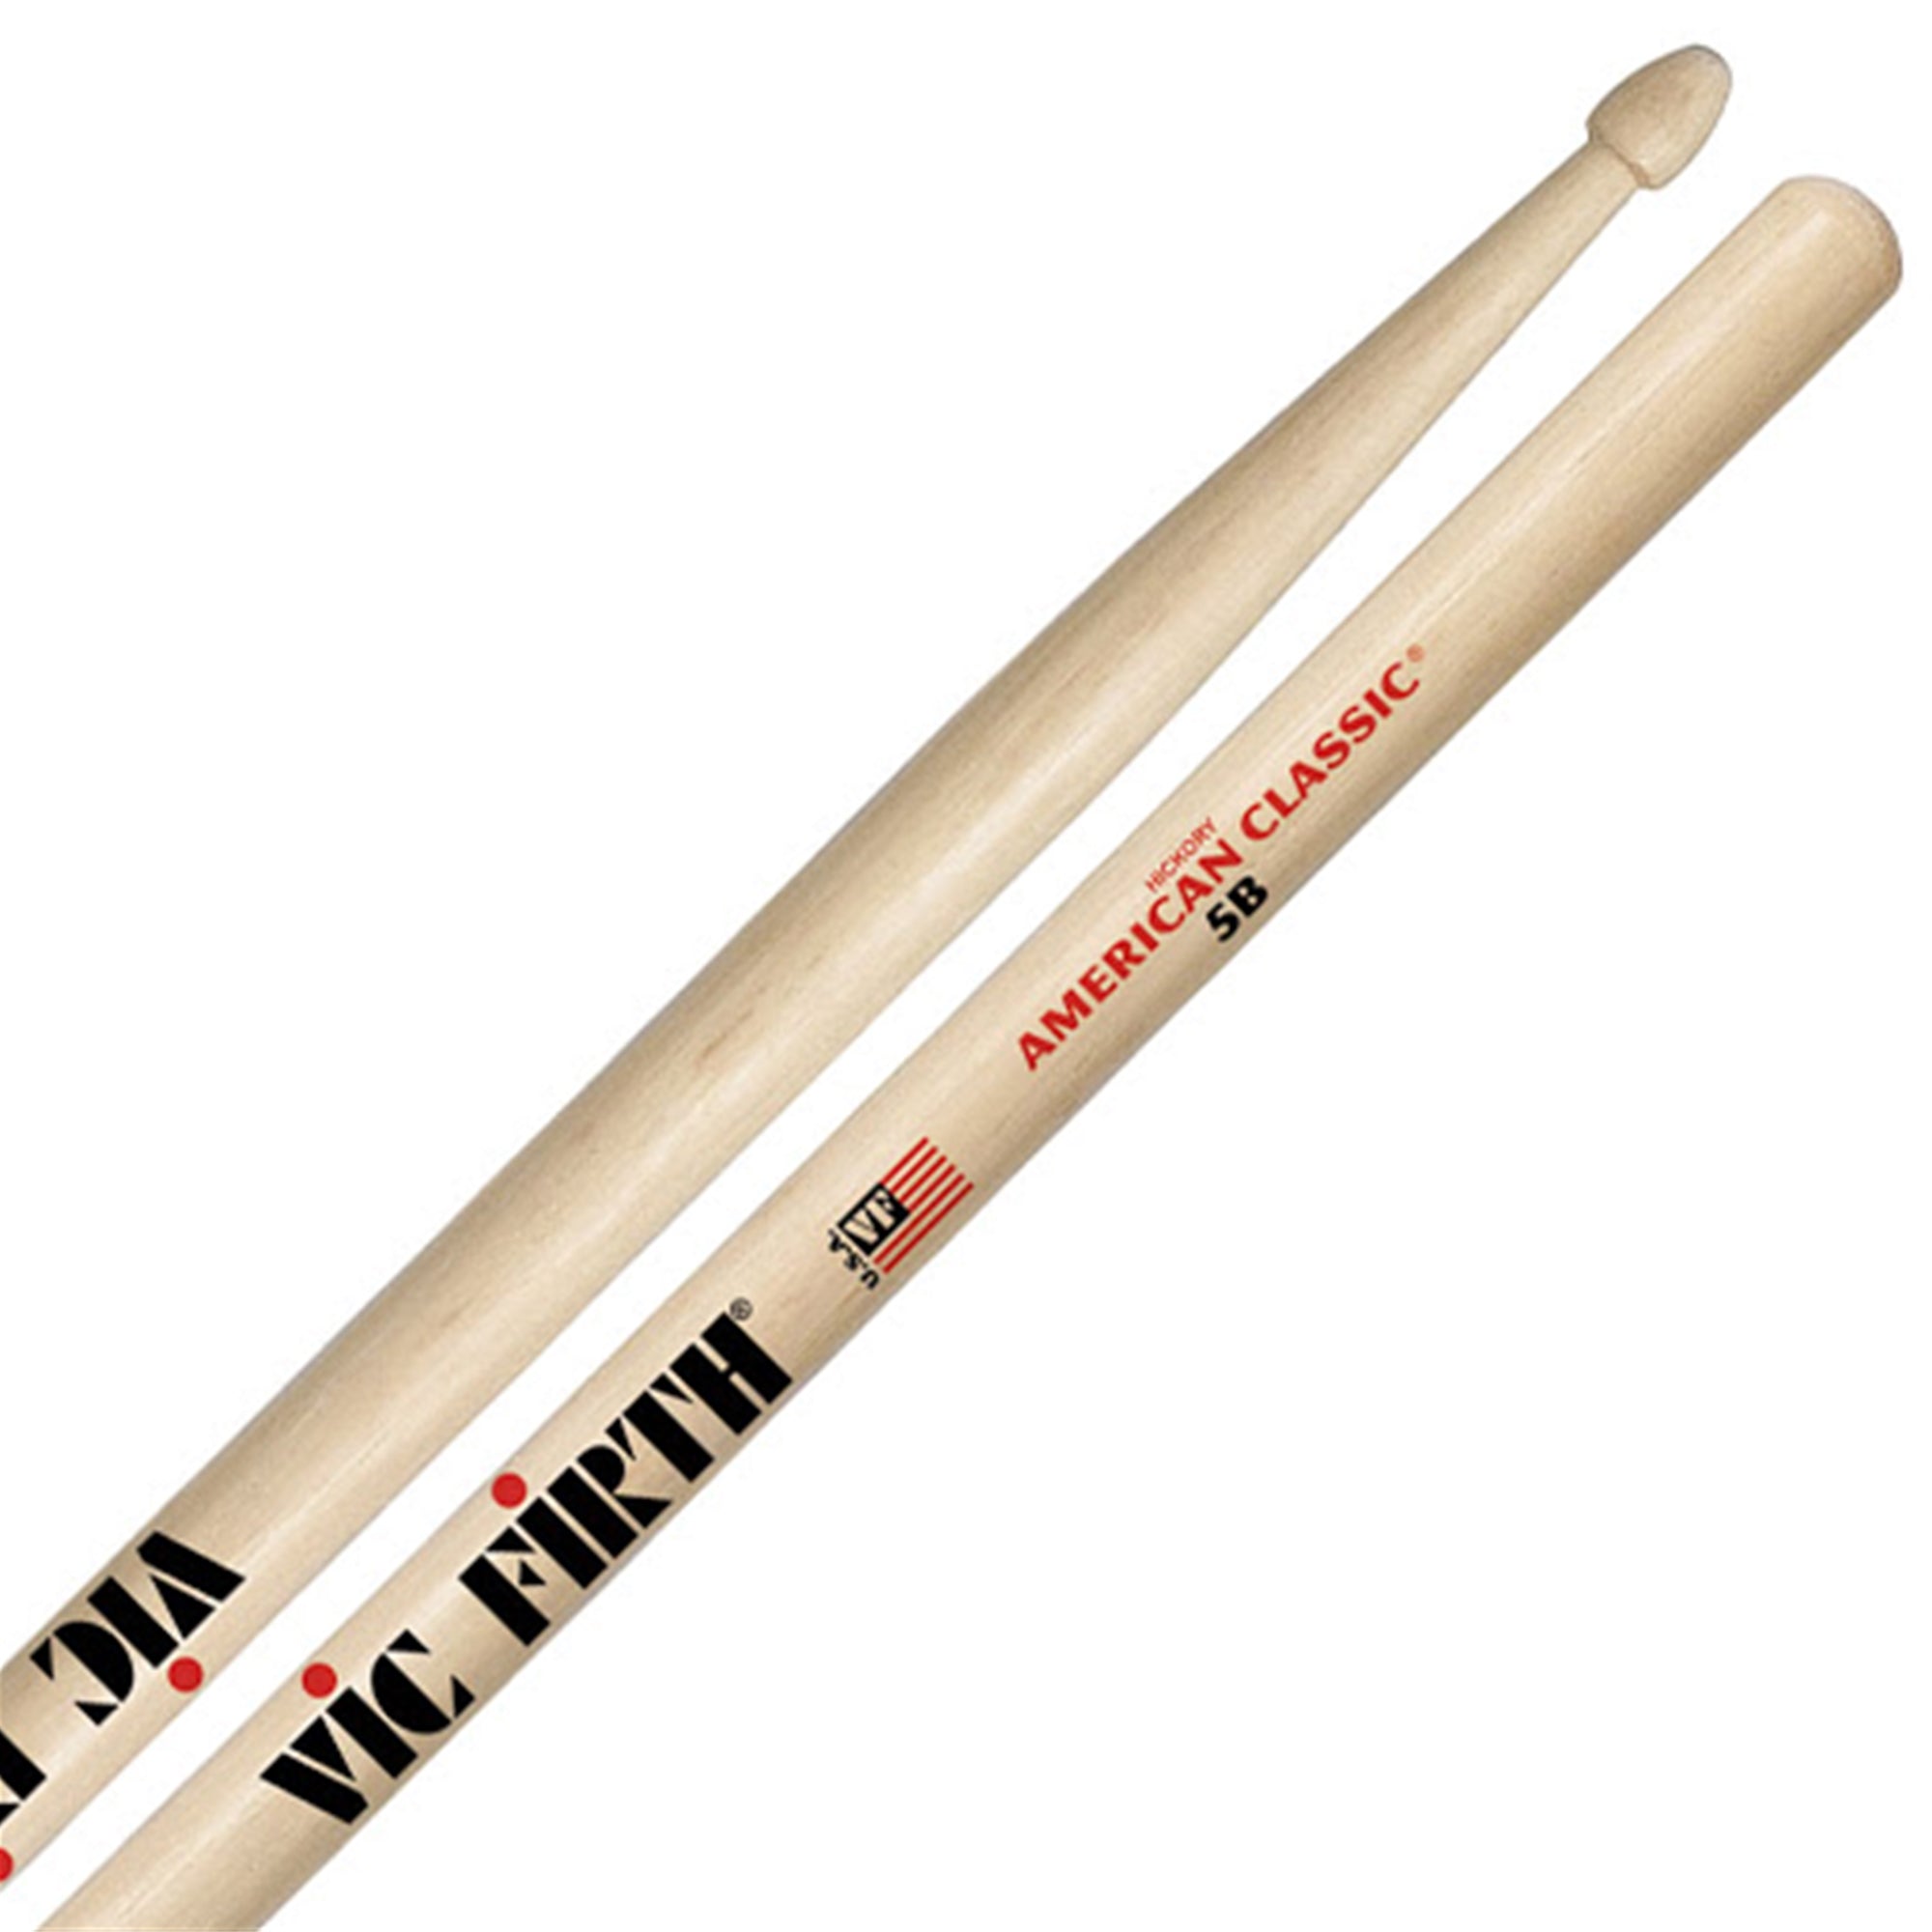 VIC FIRTH VF5B 5B American Classic Hickory Drumsticks, Wood Tip